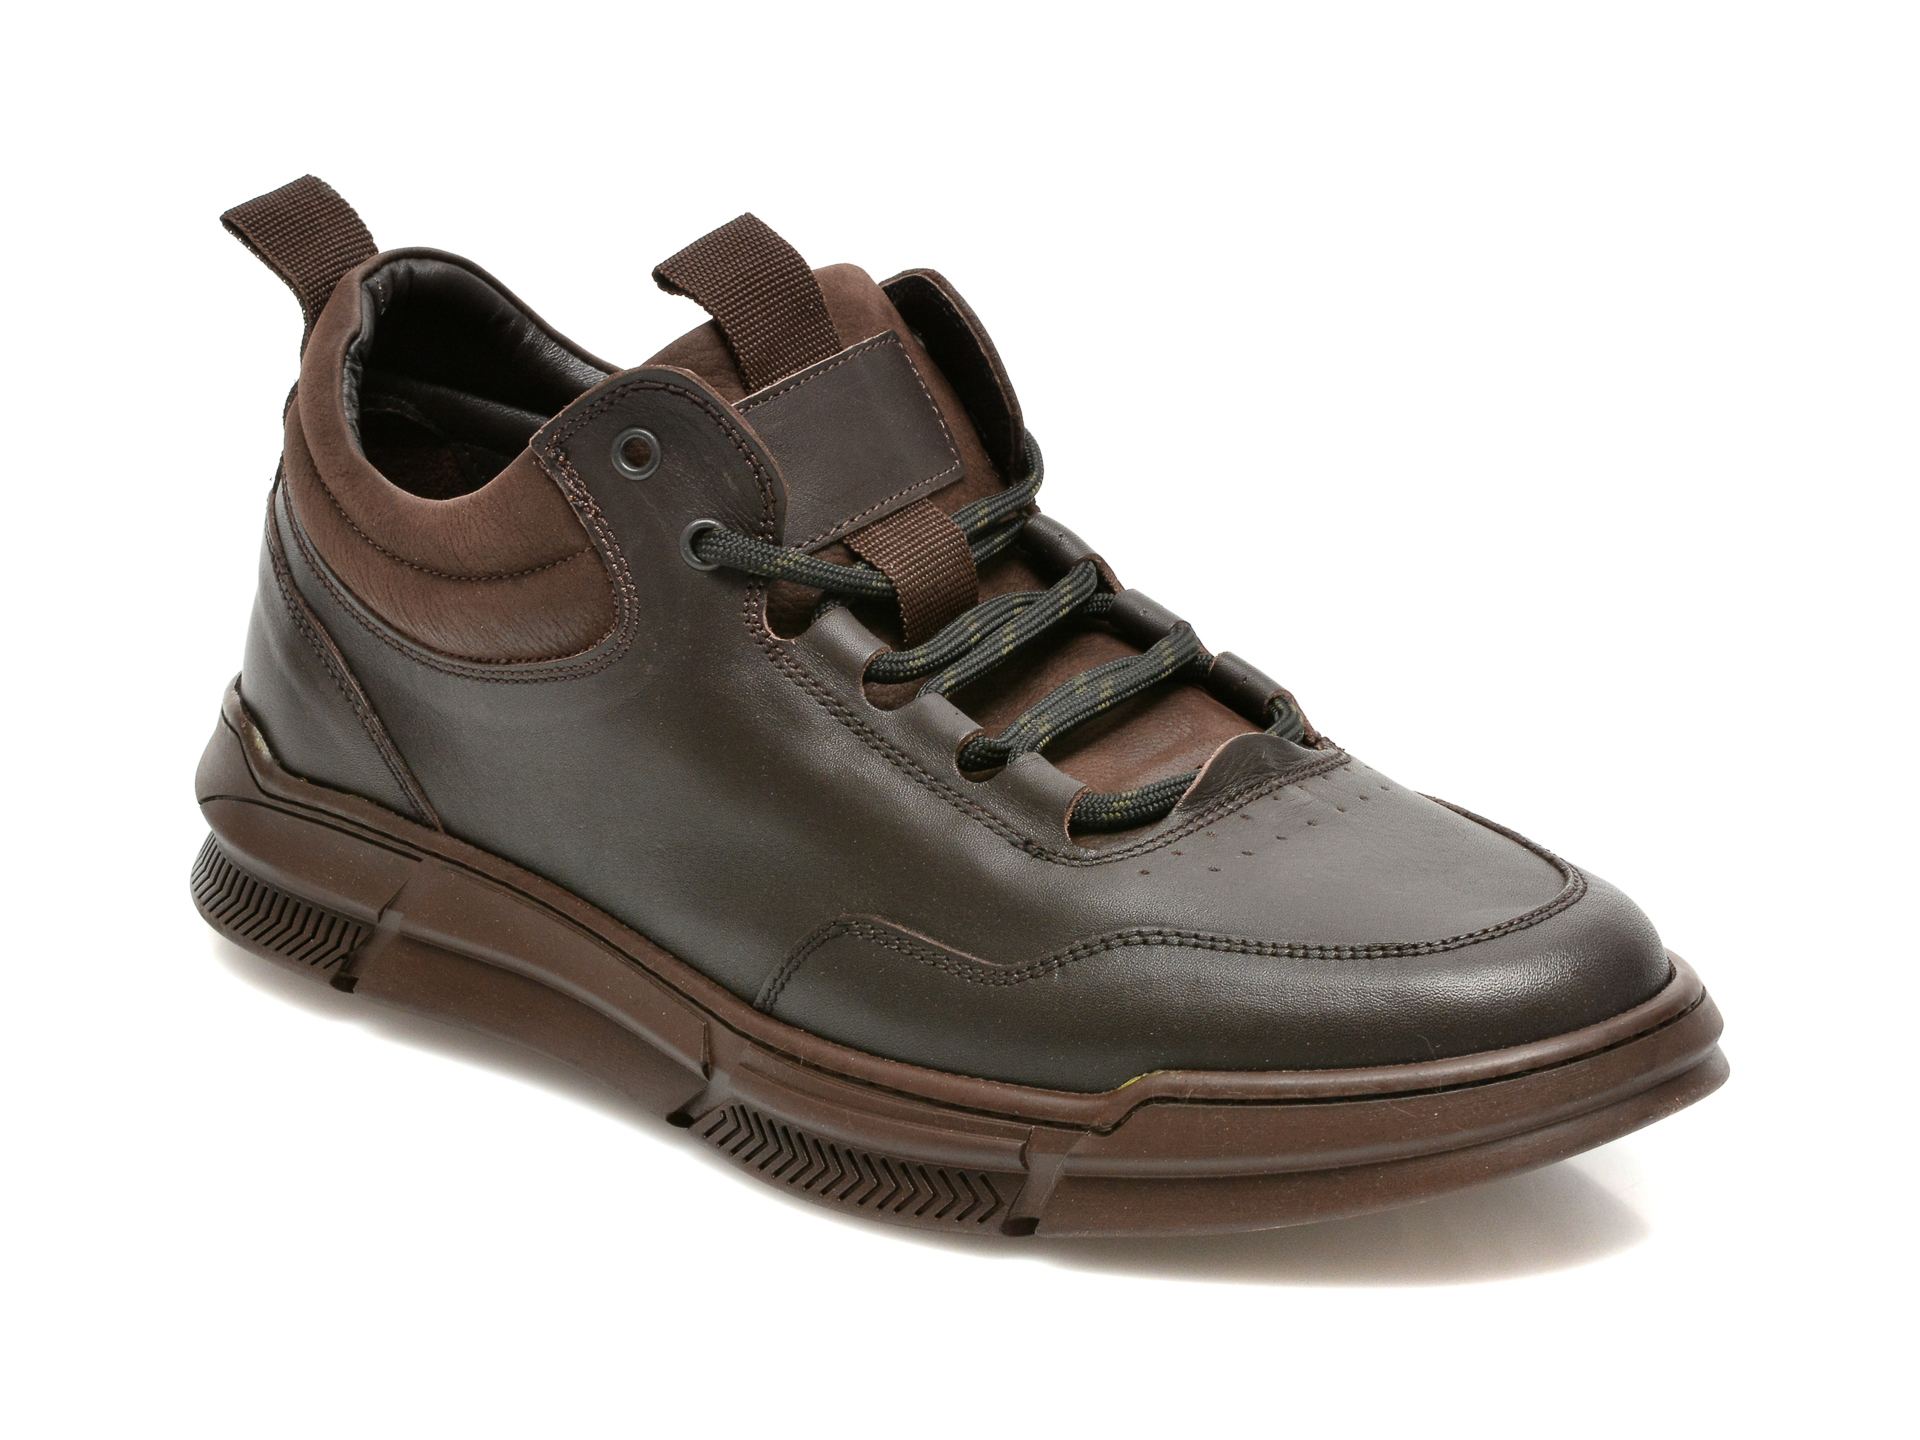 Pantofi OTTER maro, 540, din piele naturala Otter imagine 2022 13clothing.ro